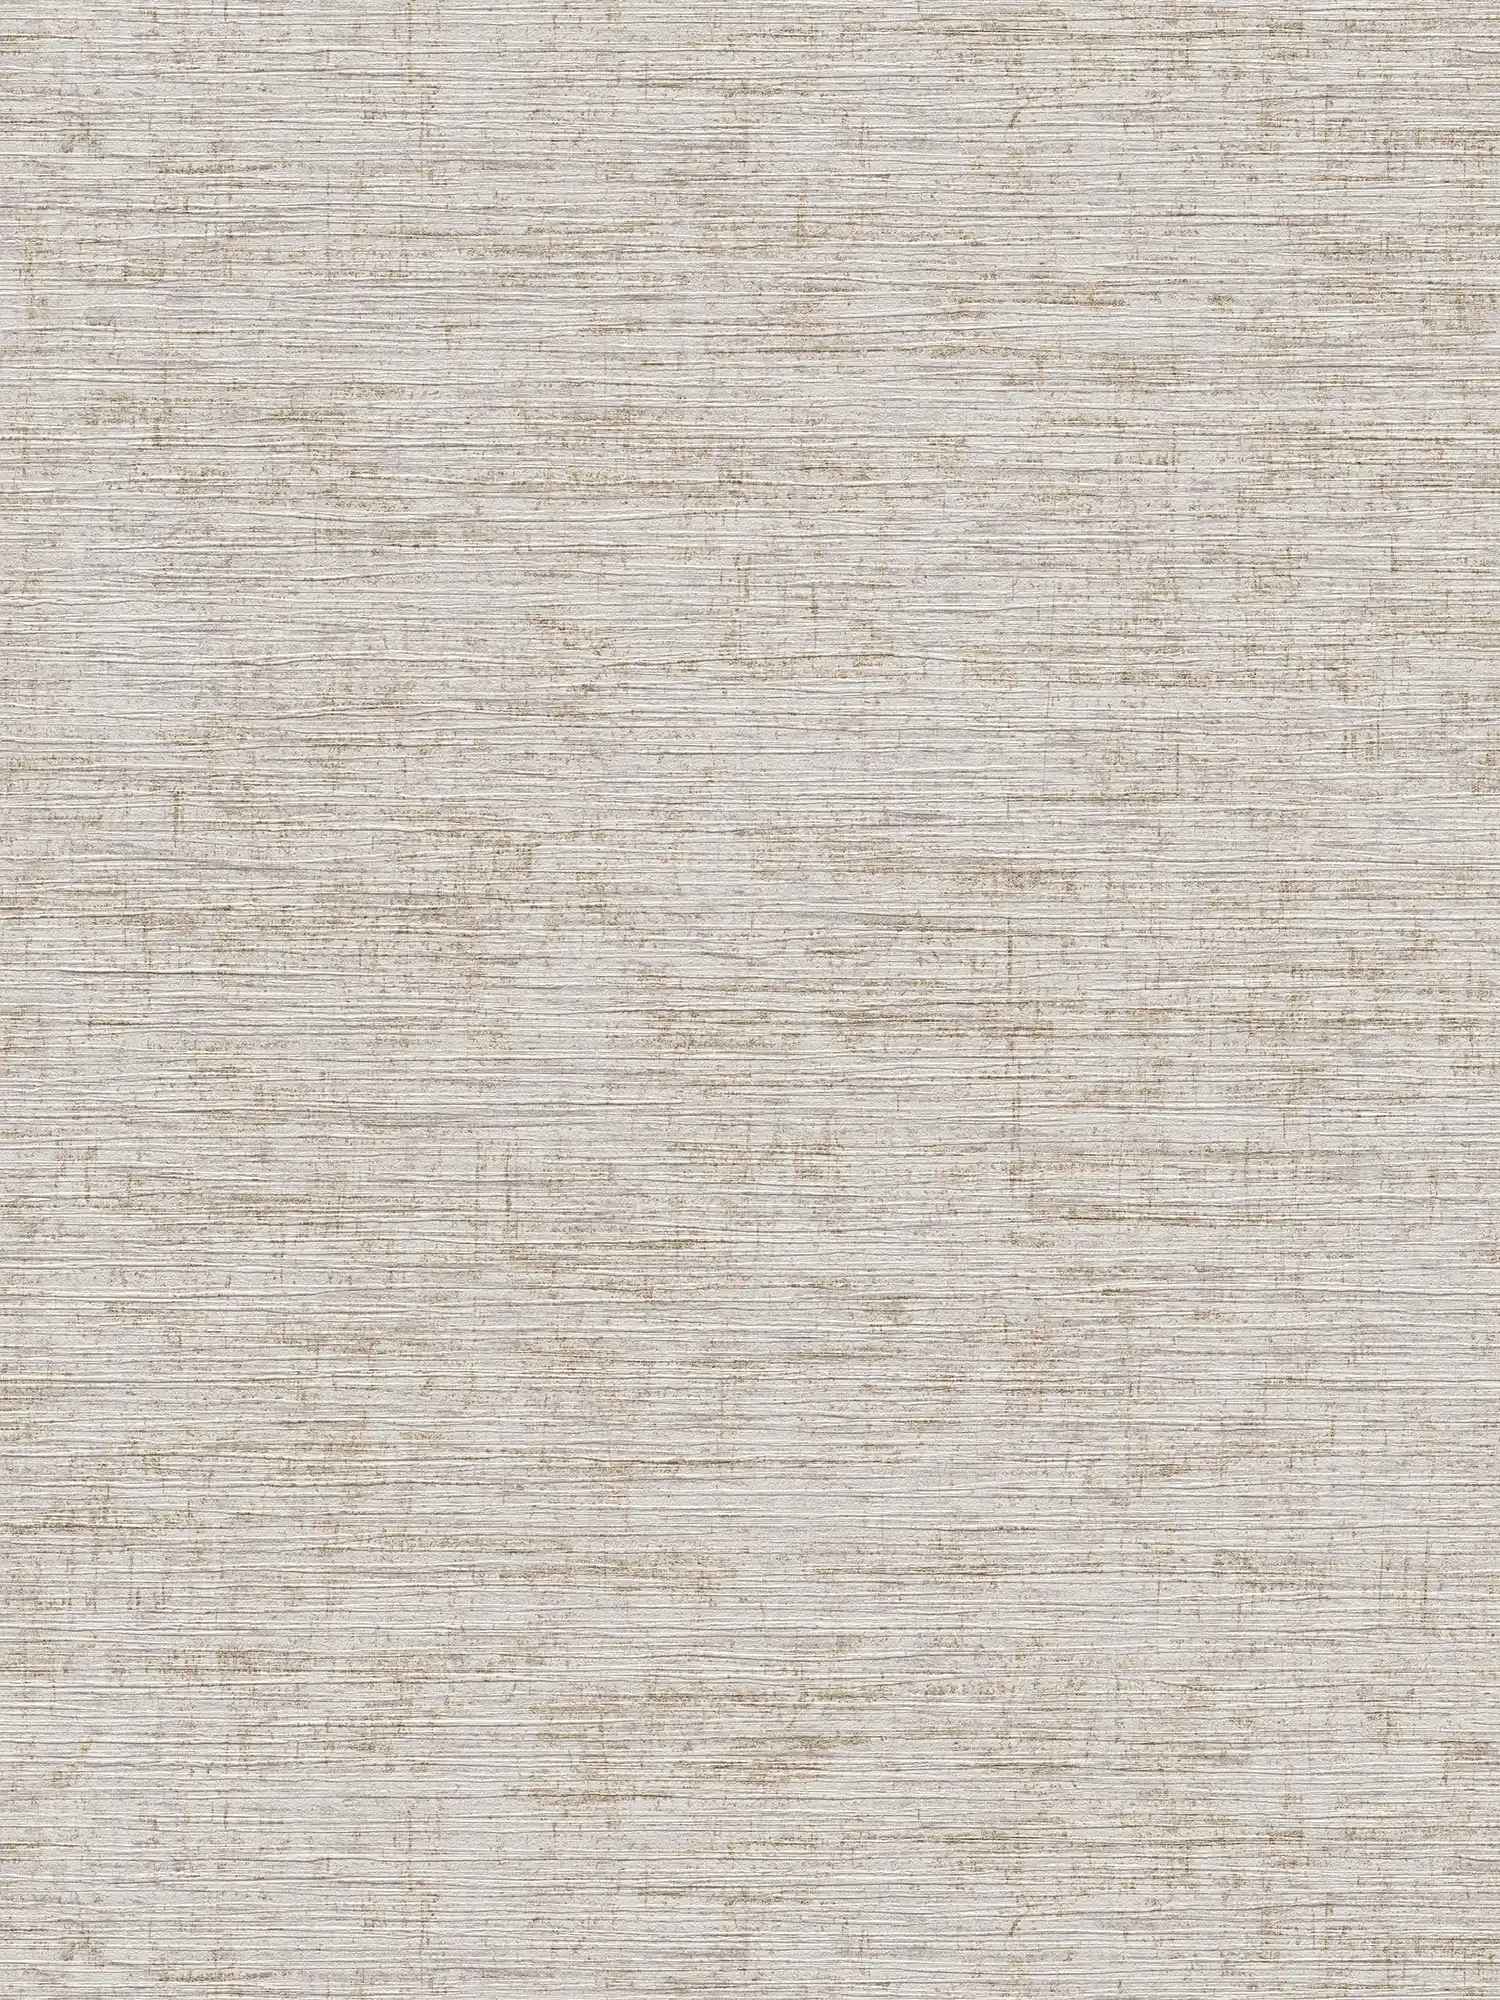 Melange wallpaper with textile embossed pattern - beige, grey, metallic
